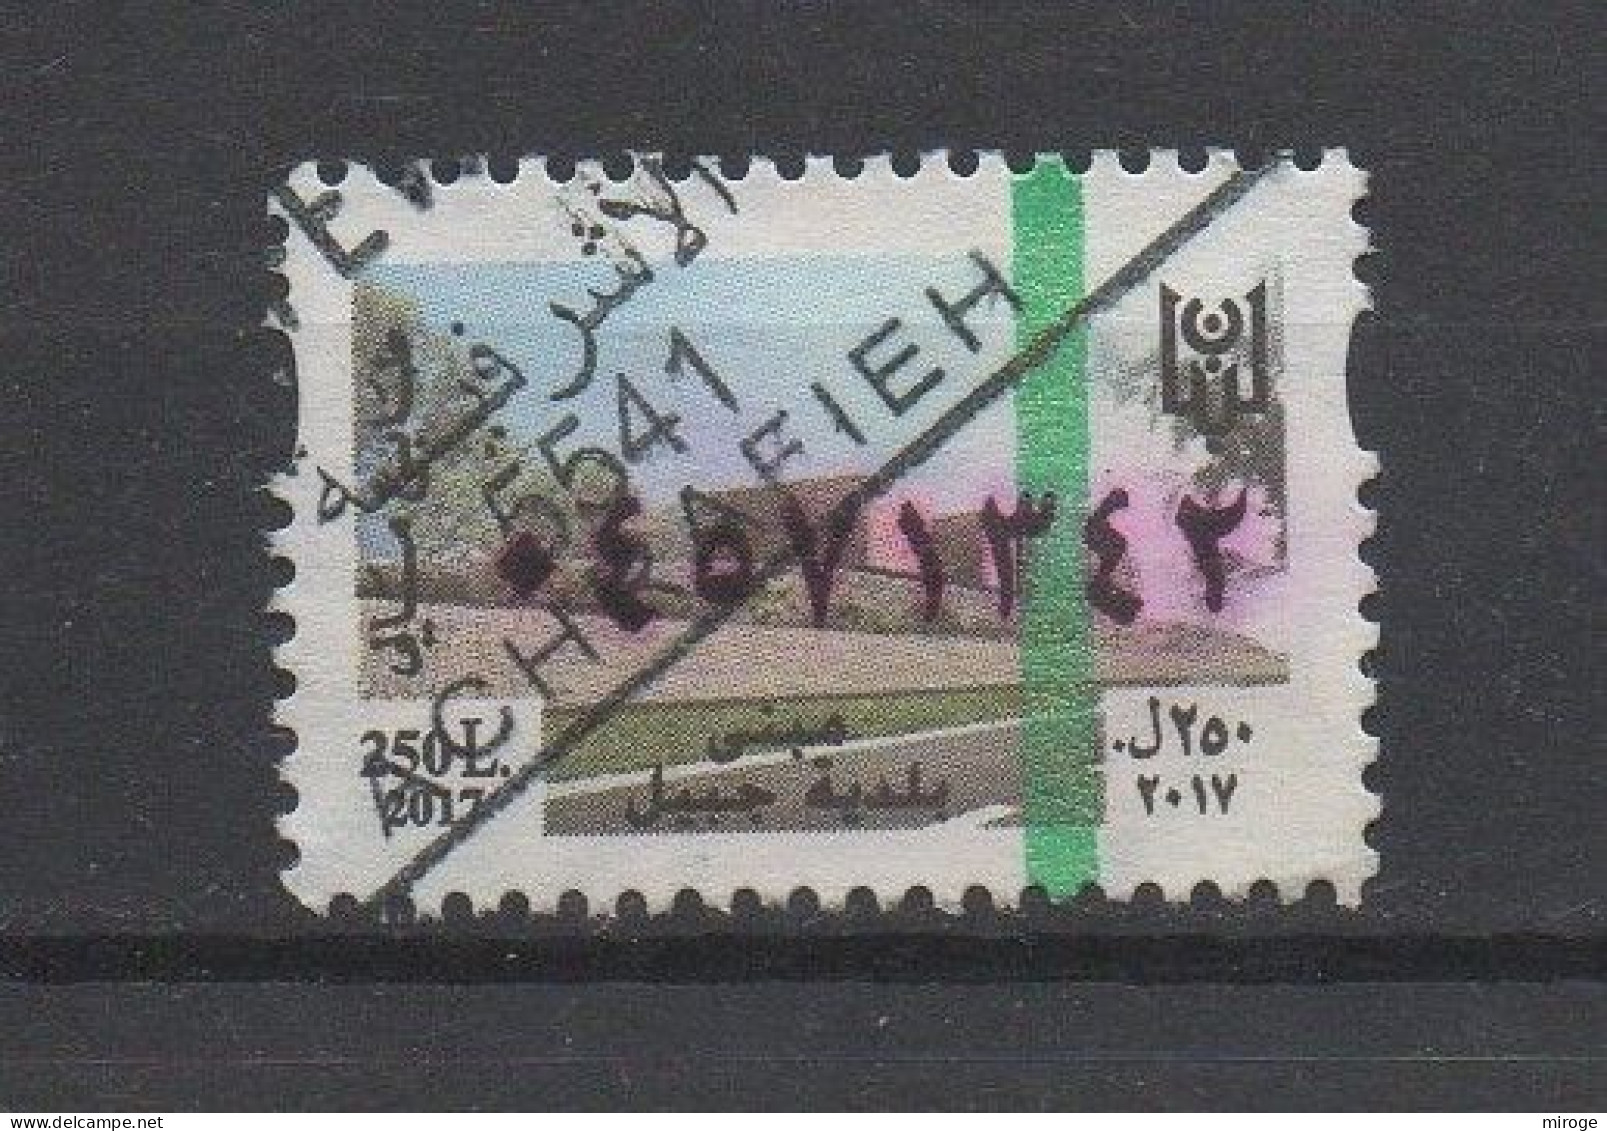 Lebanon Jbeil Fiscal 2017 250L Used Revenue Stamp, Timbre Liban - Libano